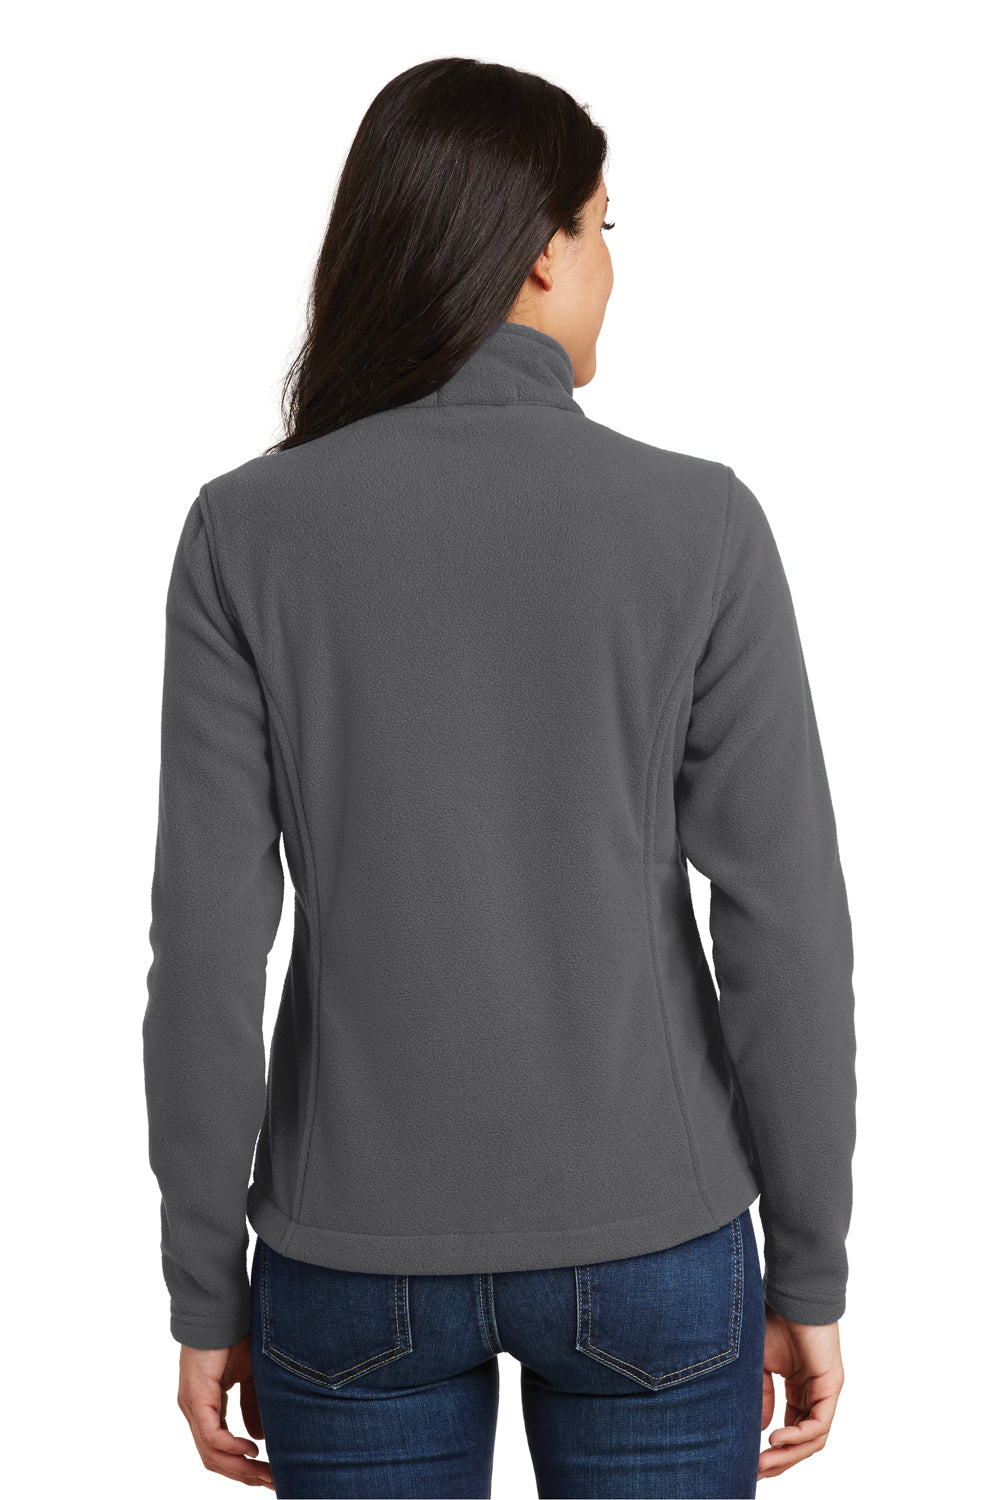 Port Authority L217 Womens Full Zip Fleece Jacket Iron Grey Back